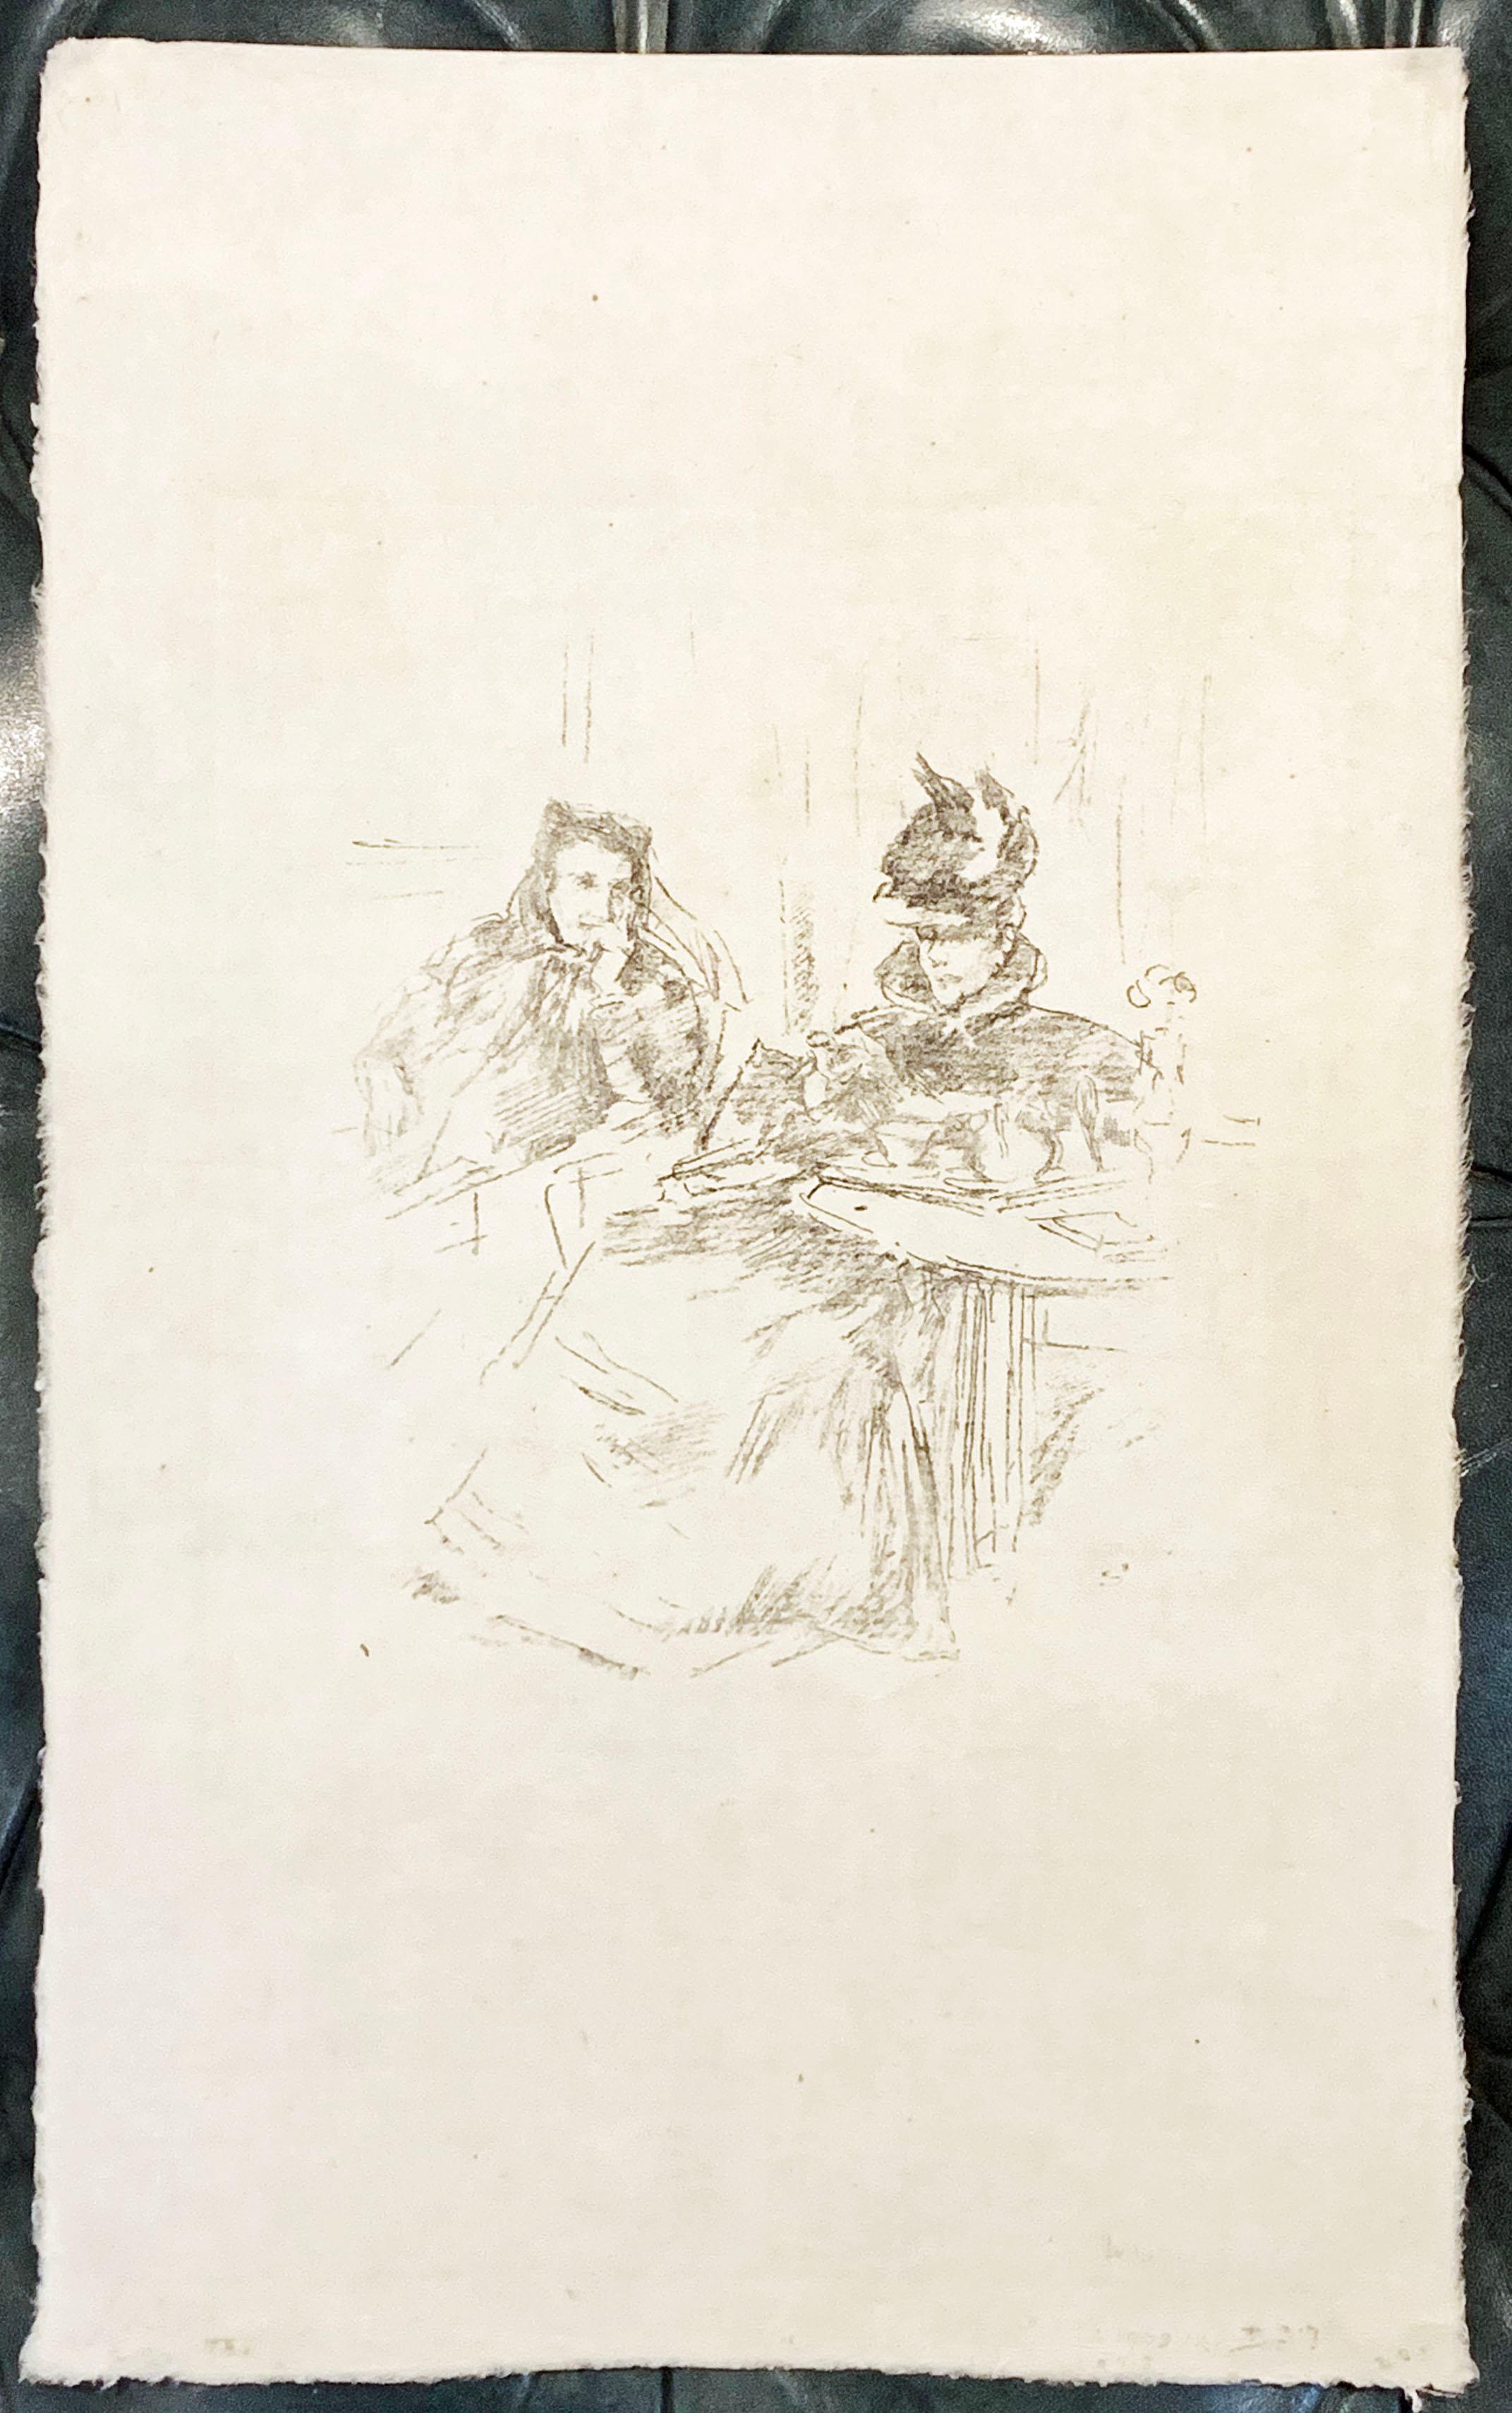 AFTERNOON TEA - Print by James Abbott McNeill Whistler